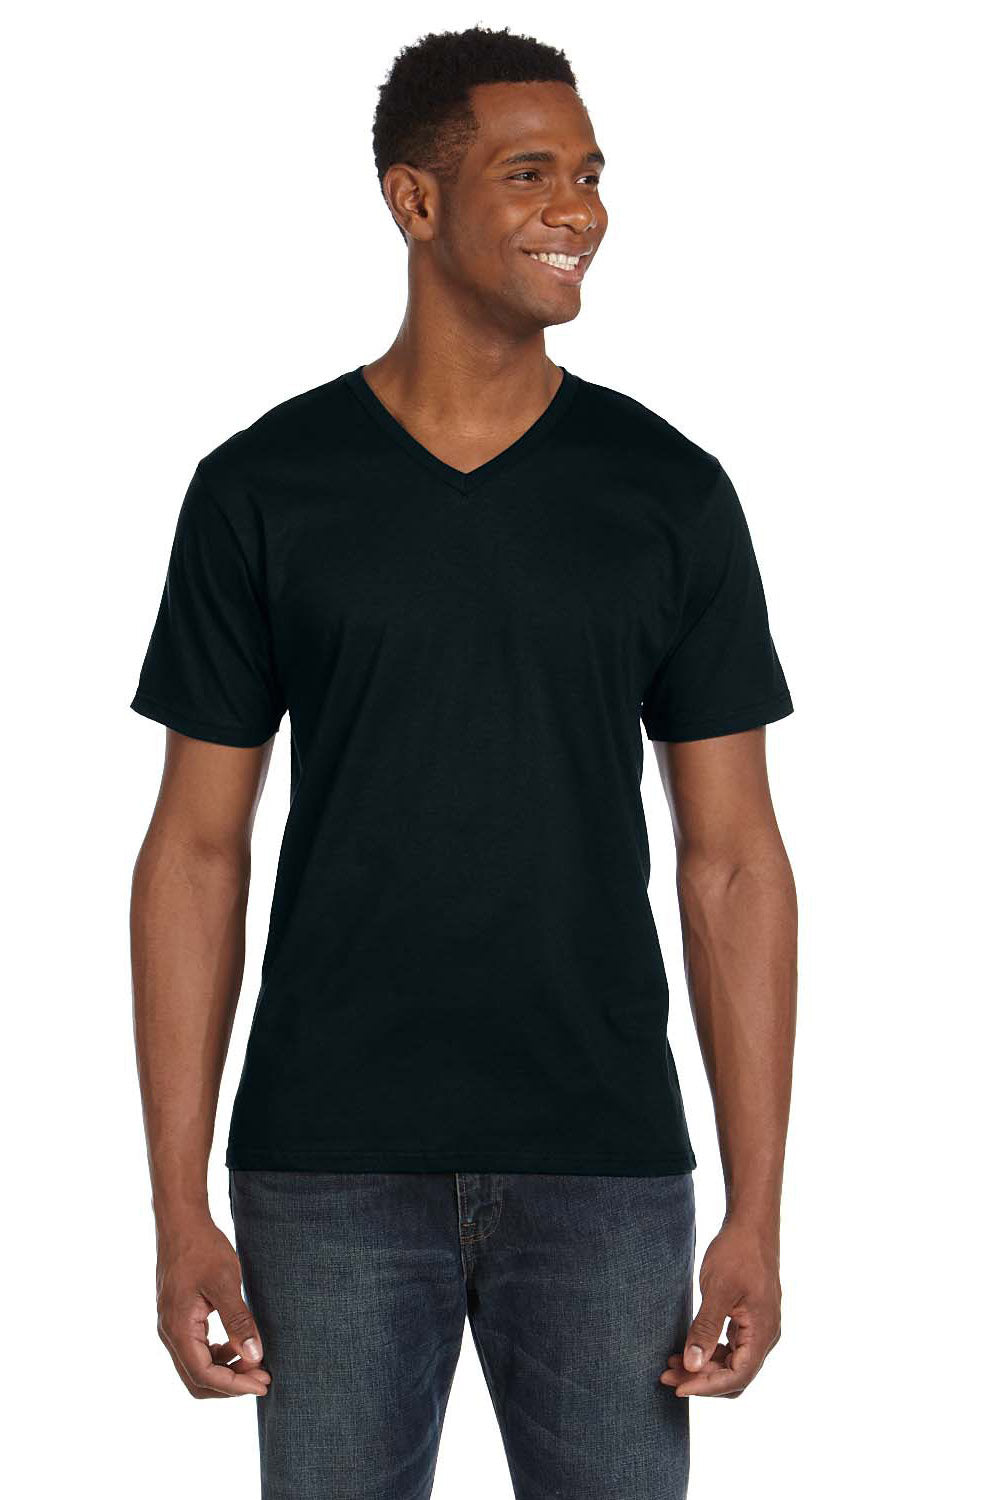 Anvil 982 Mens Short Sleeve V-Neck T-Shirt Black Front